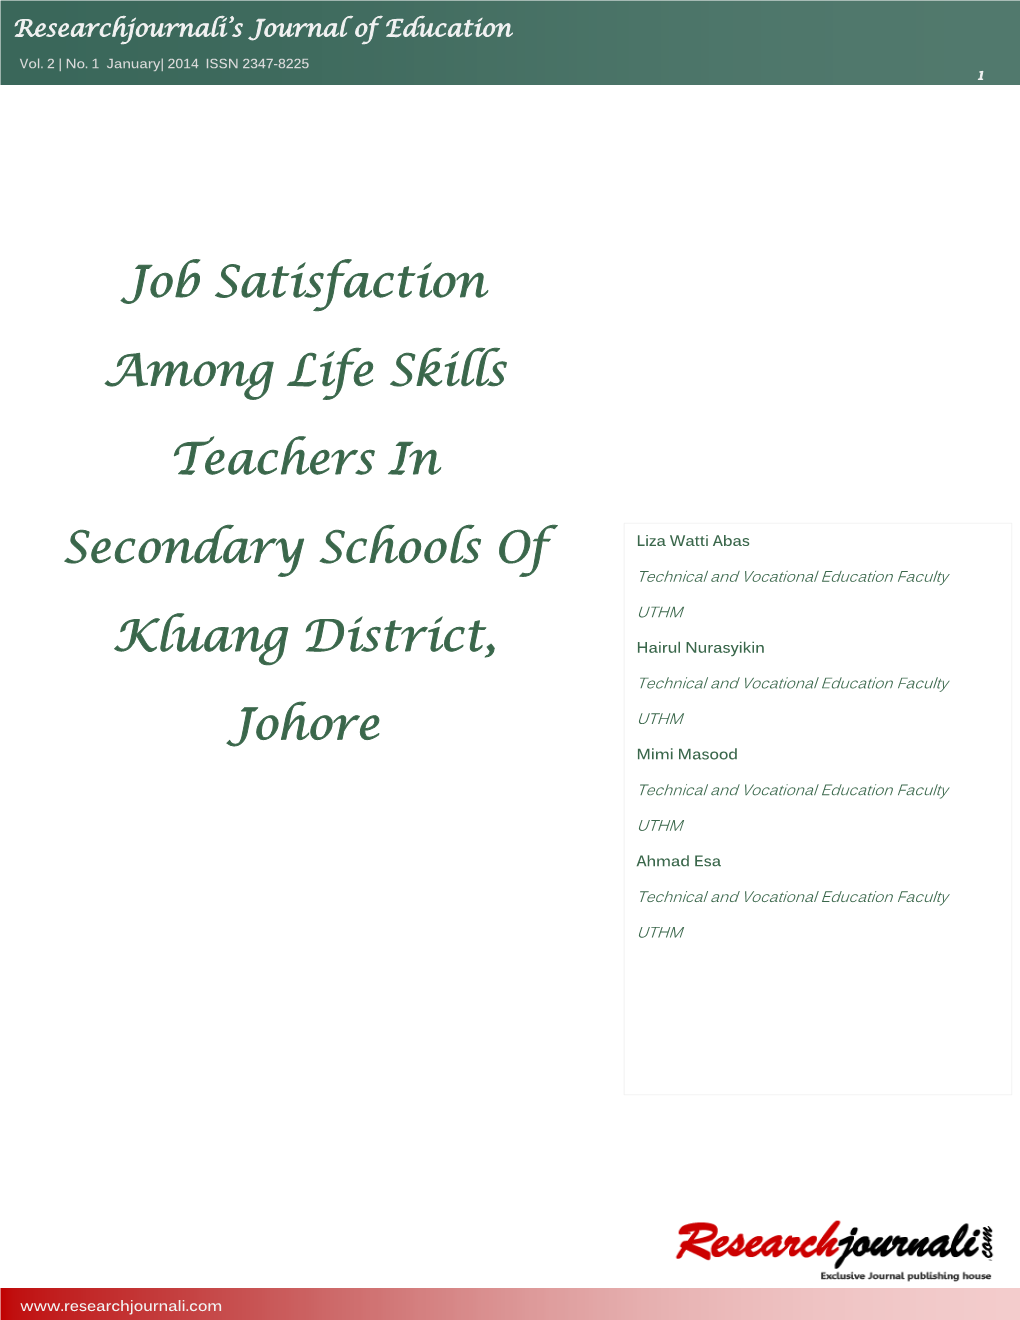 Job Satisfaction Among Life Skills Teachers in Secondary Schools of Kluang, Johore